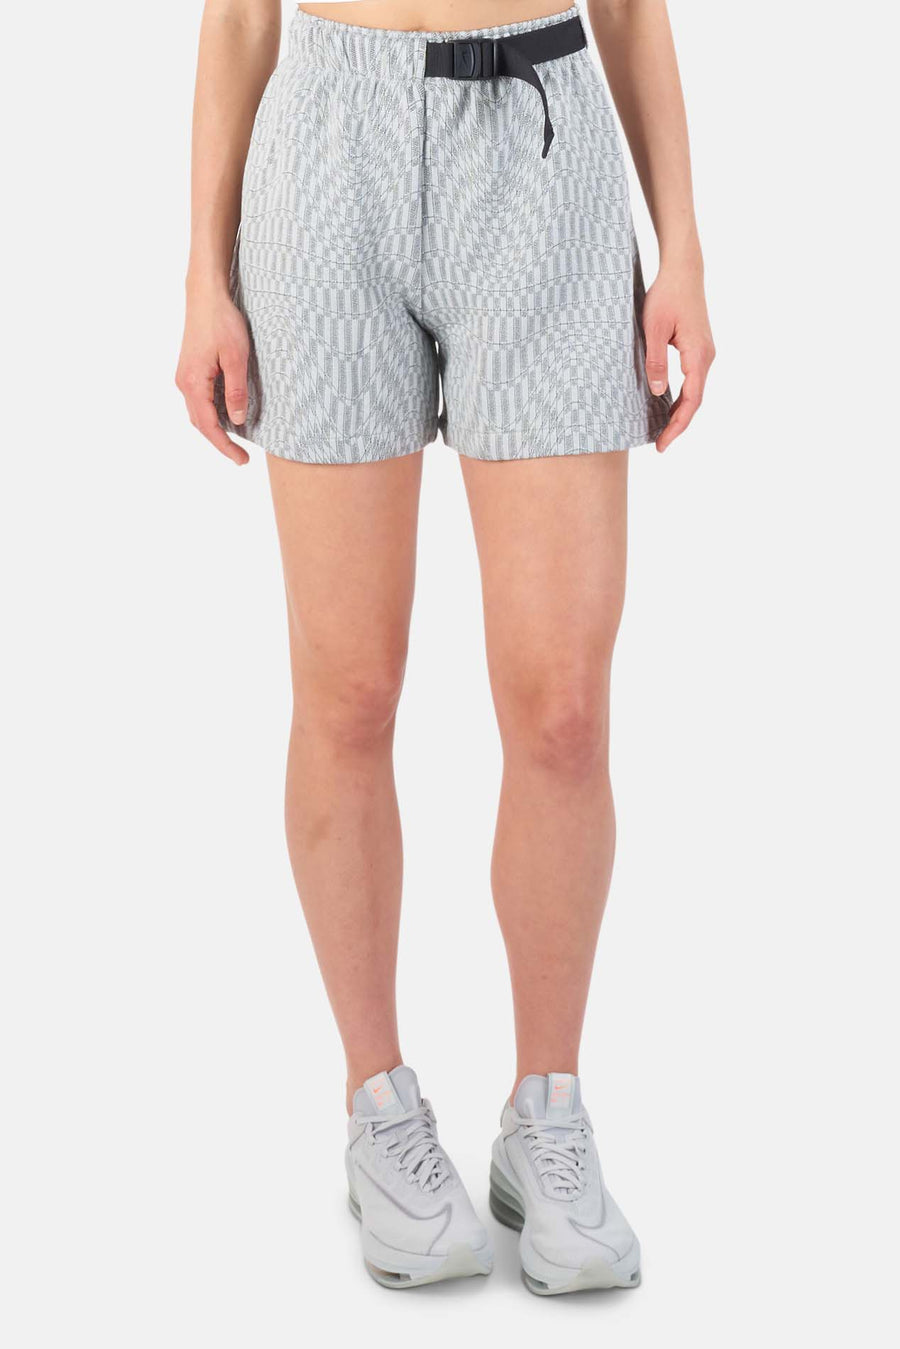 Nike Tech Pack Geometric Knit Shorts - blueandcream